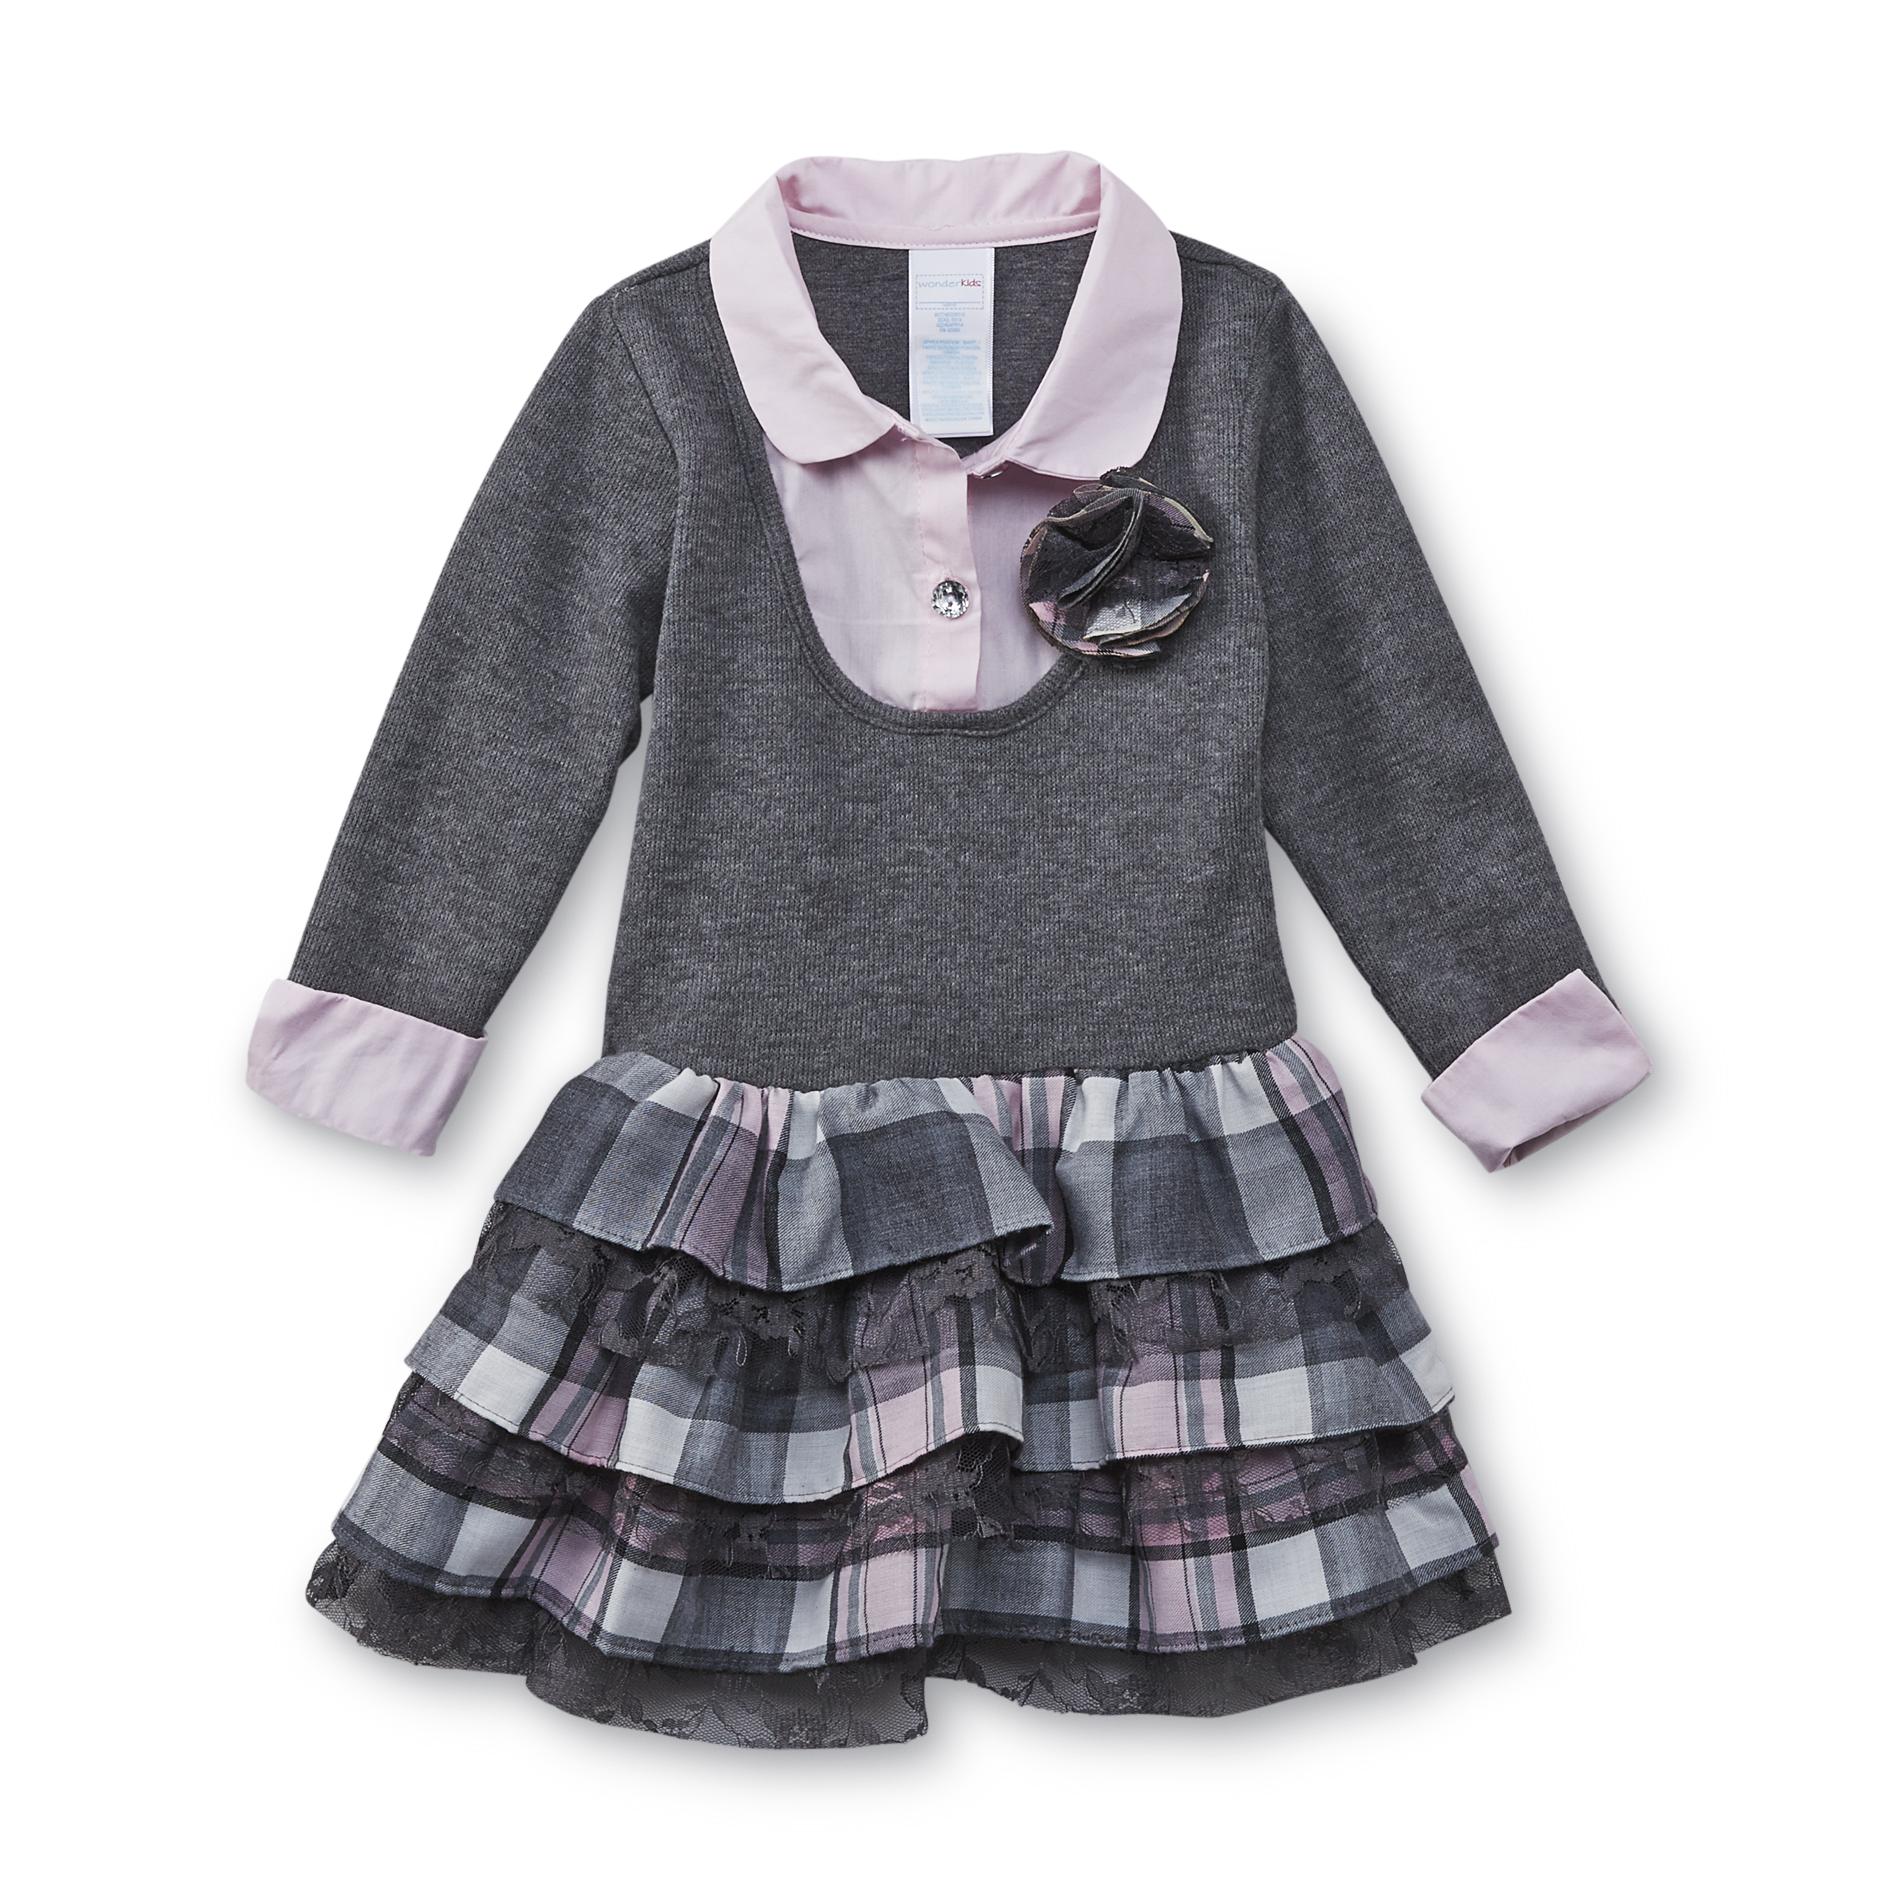 WonderKids Infant & Toddler Girl's Layered-Look Dress - Plaid